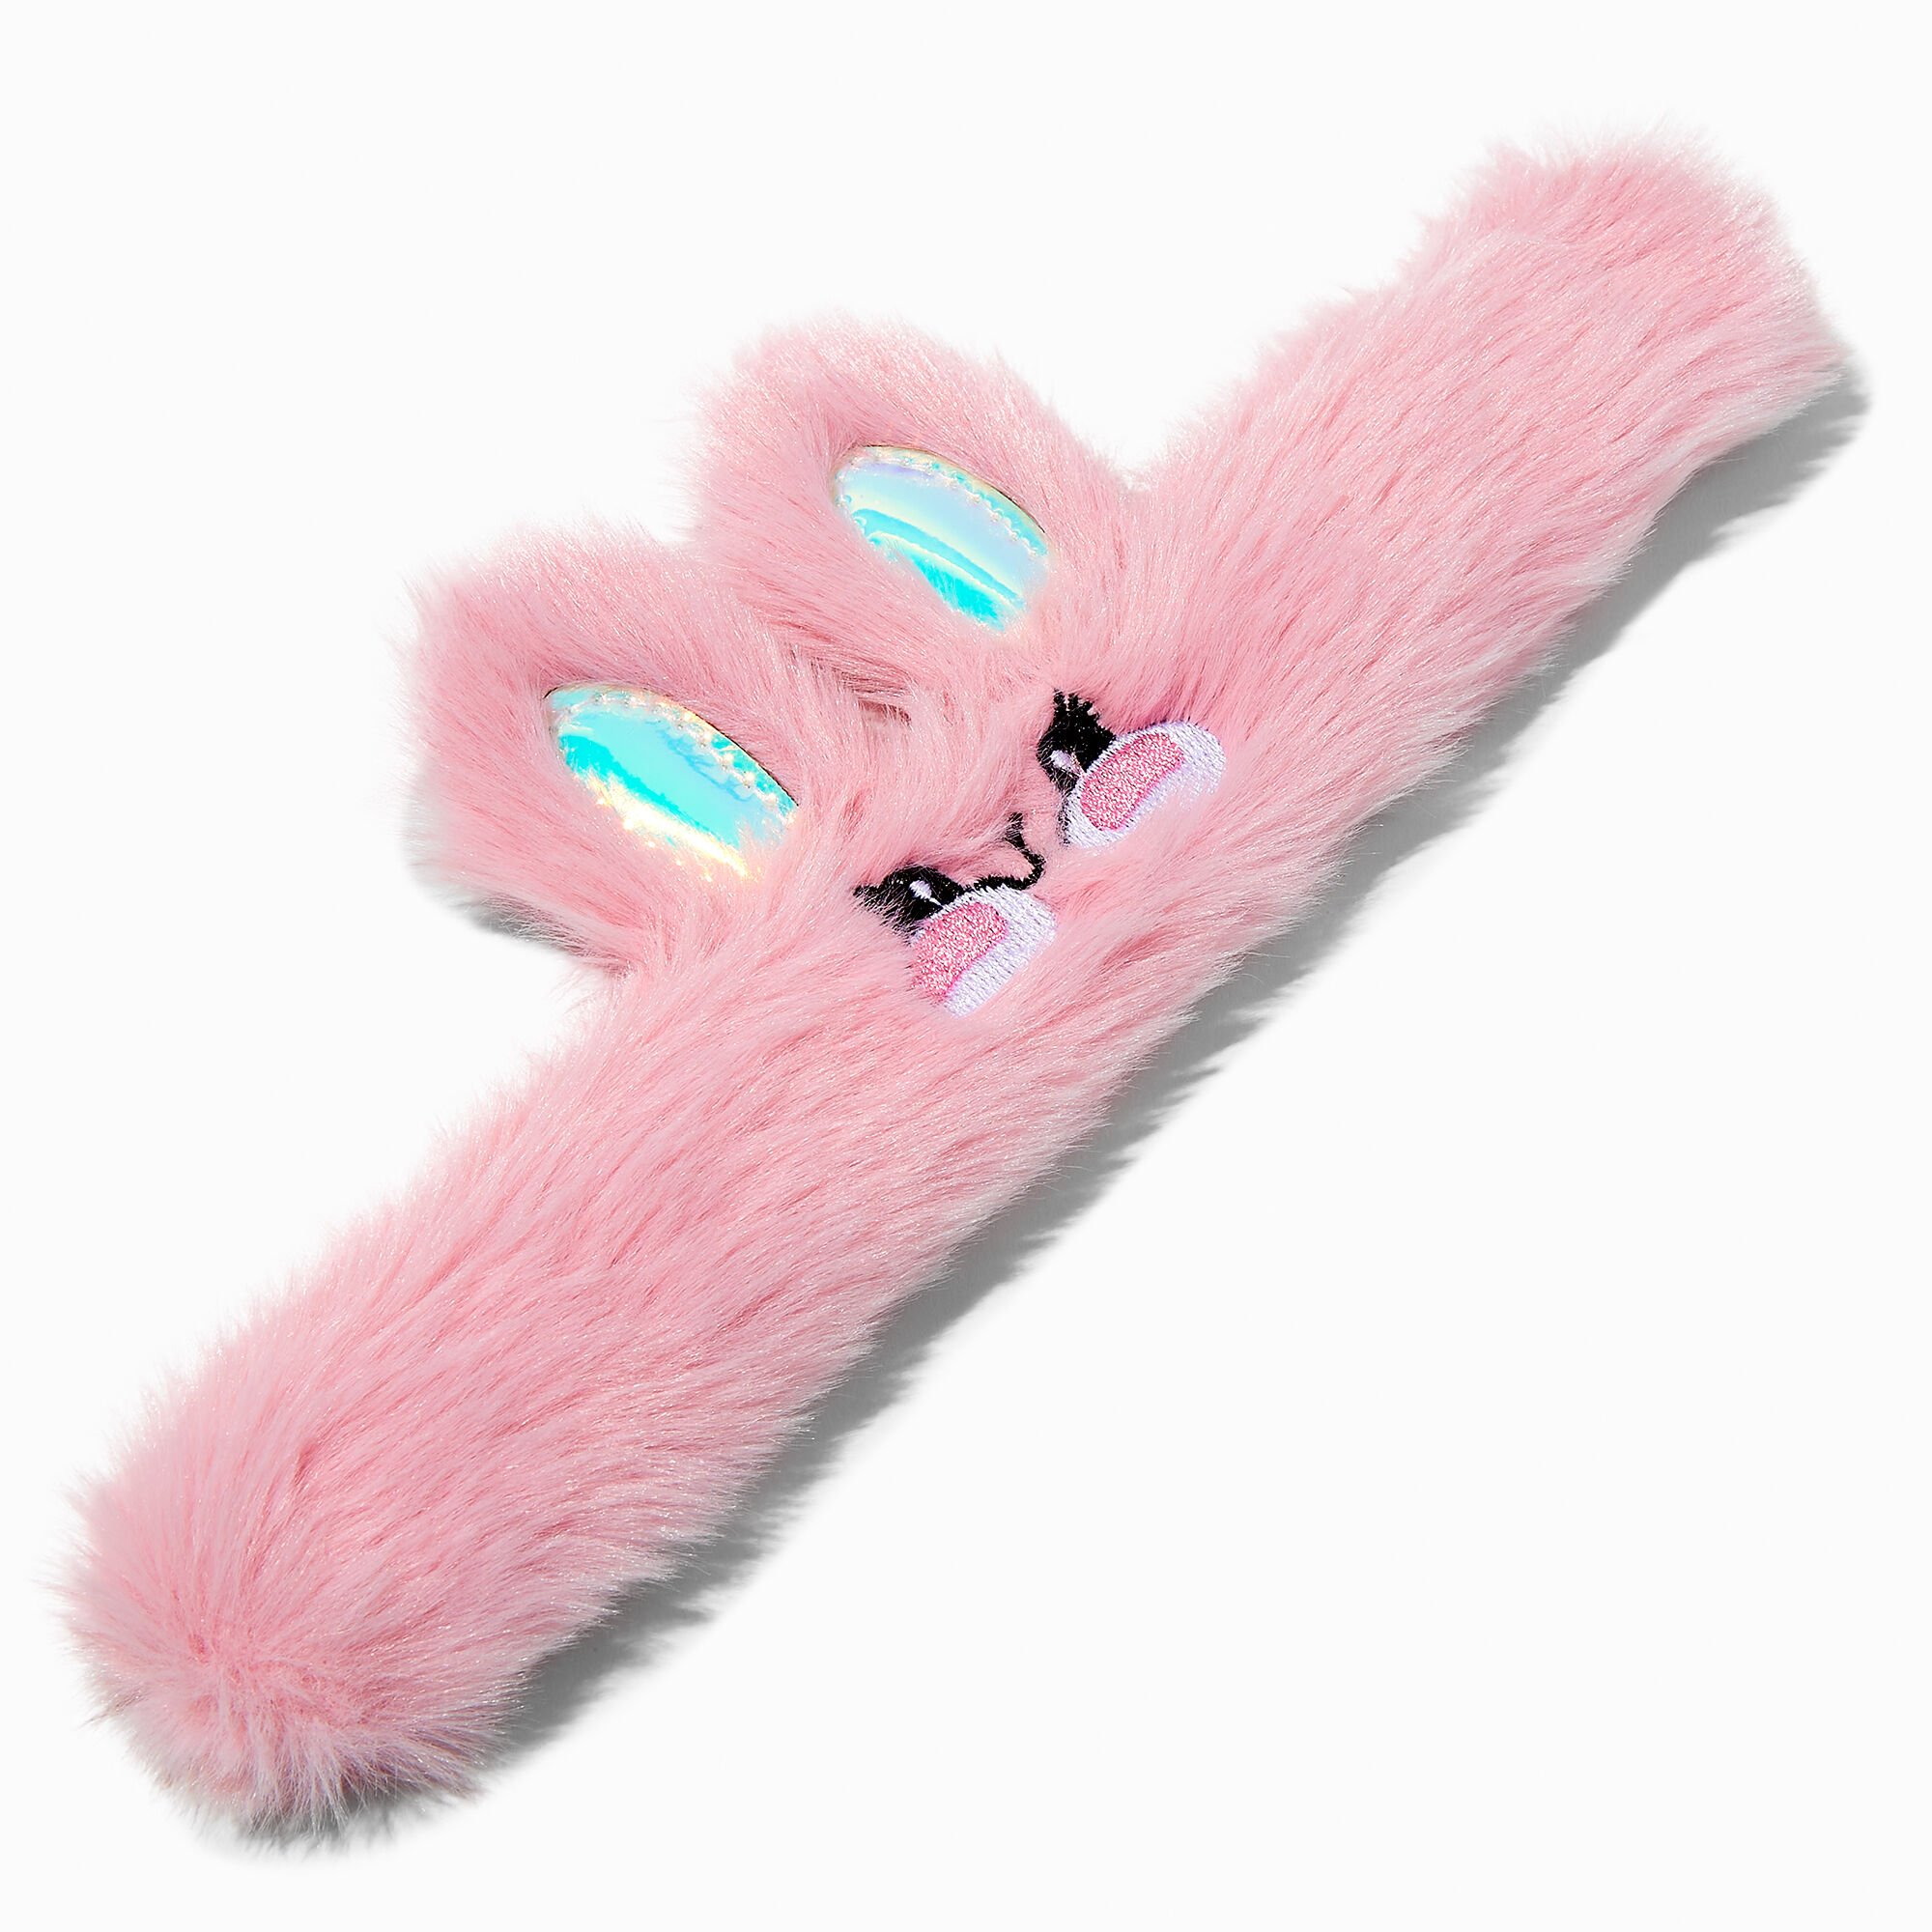 View Claires Fuzzy Bunny Slap Bracelet Pink information